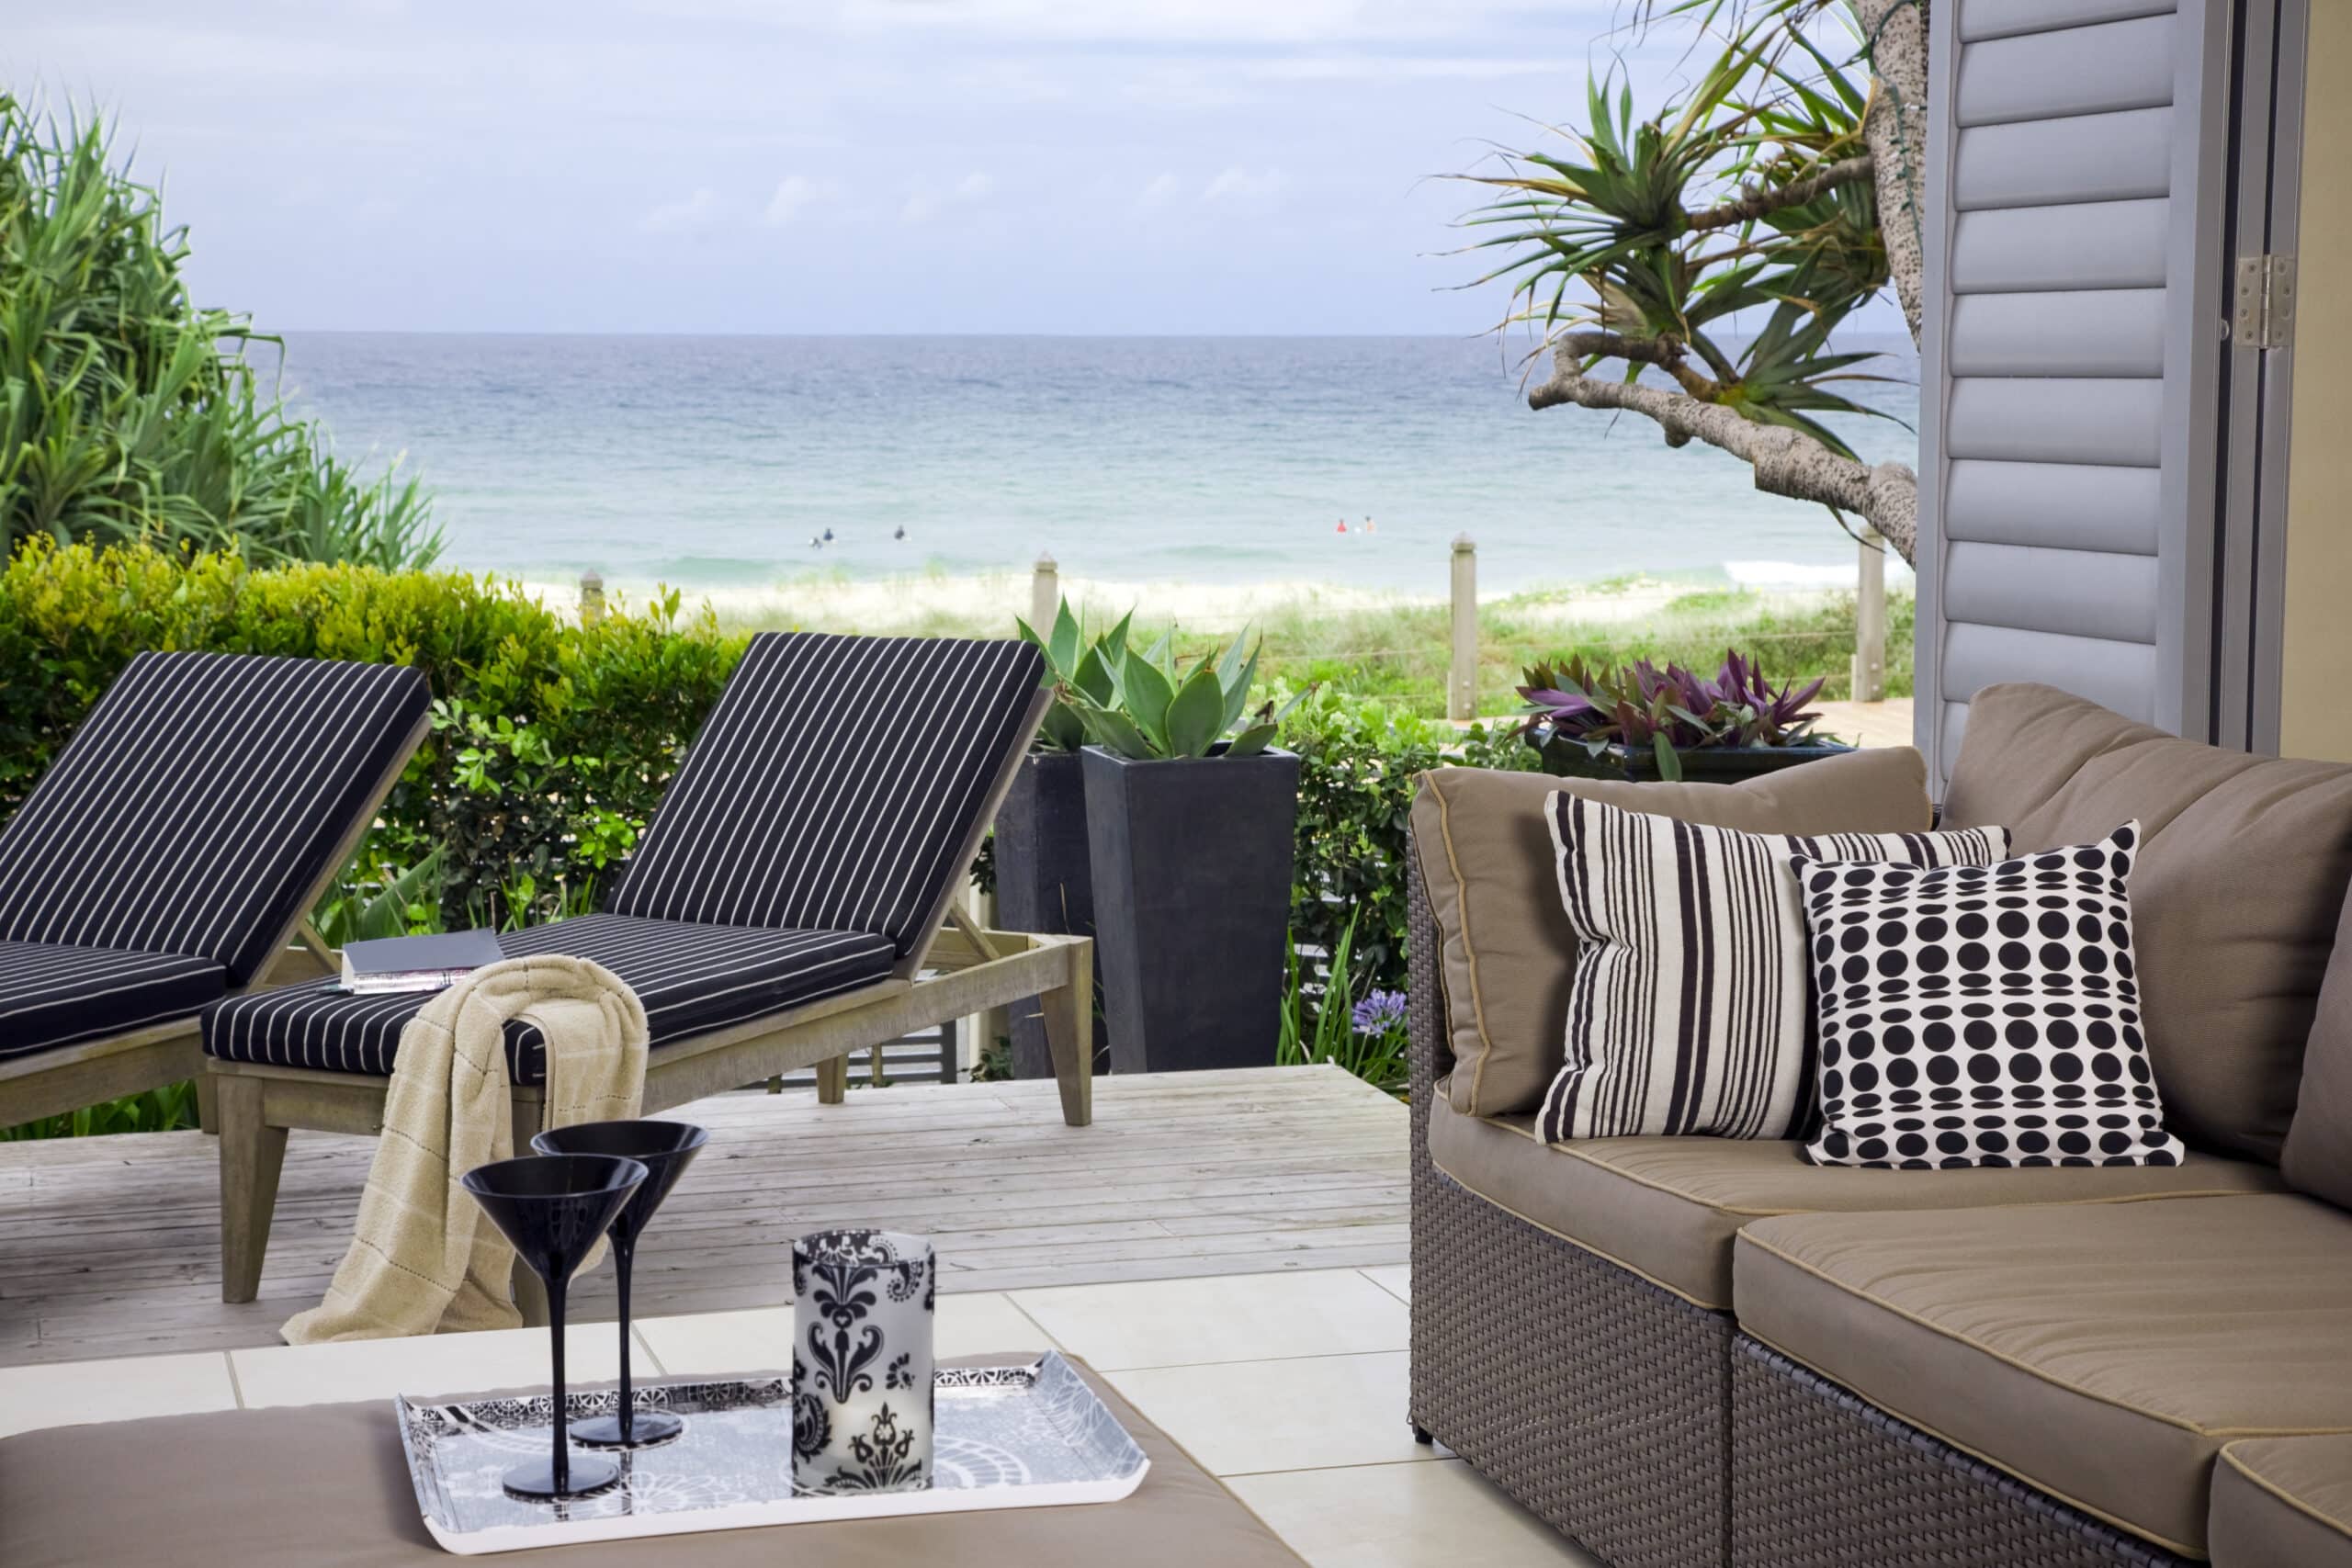 outdoors modern home on seaside